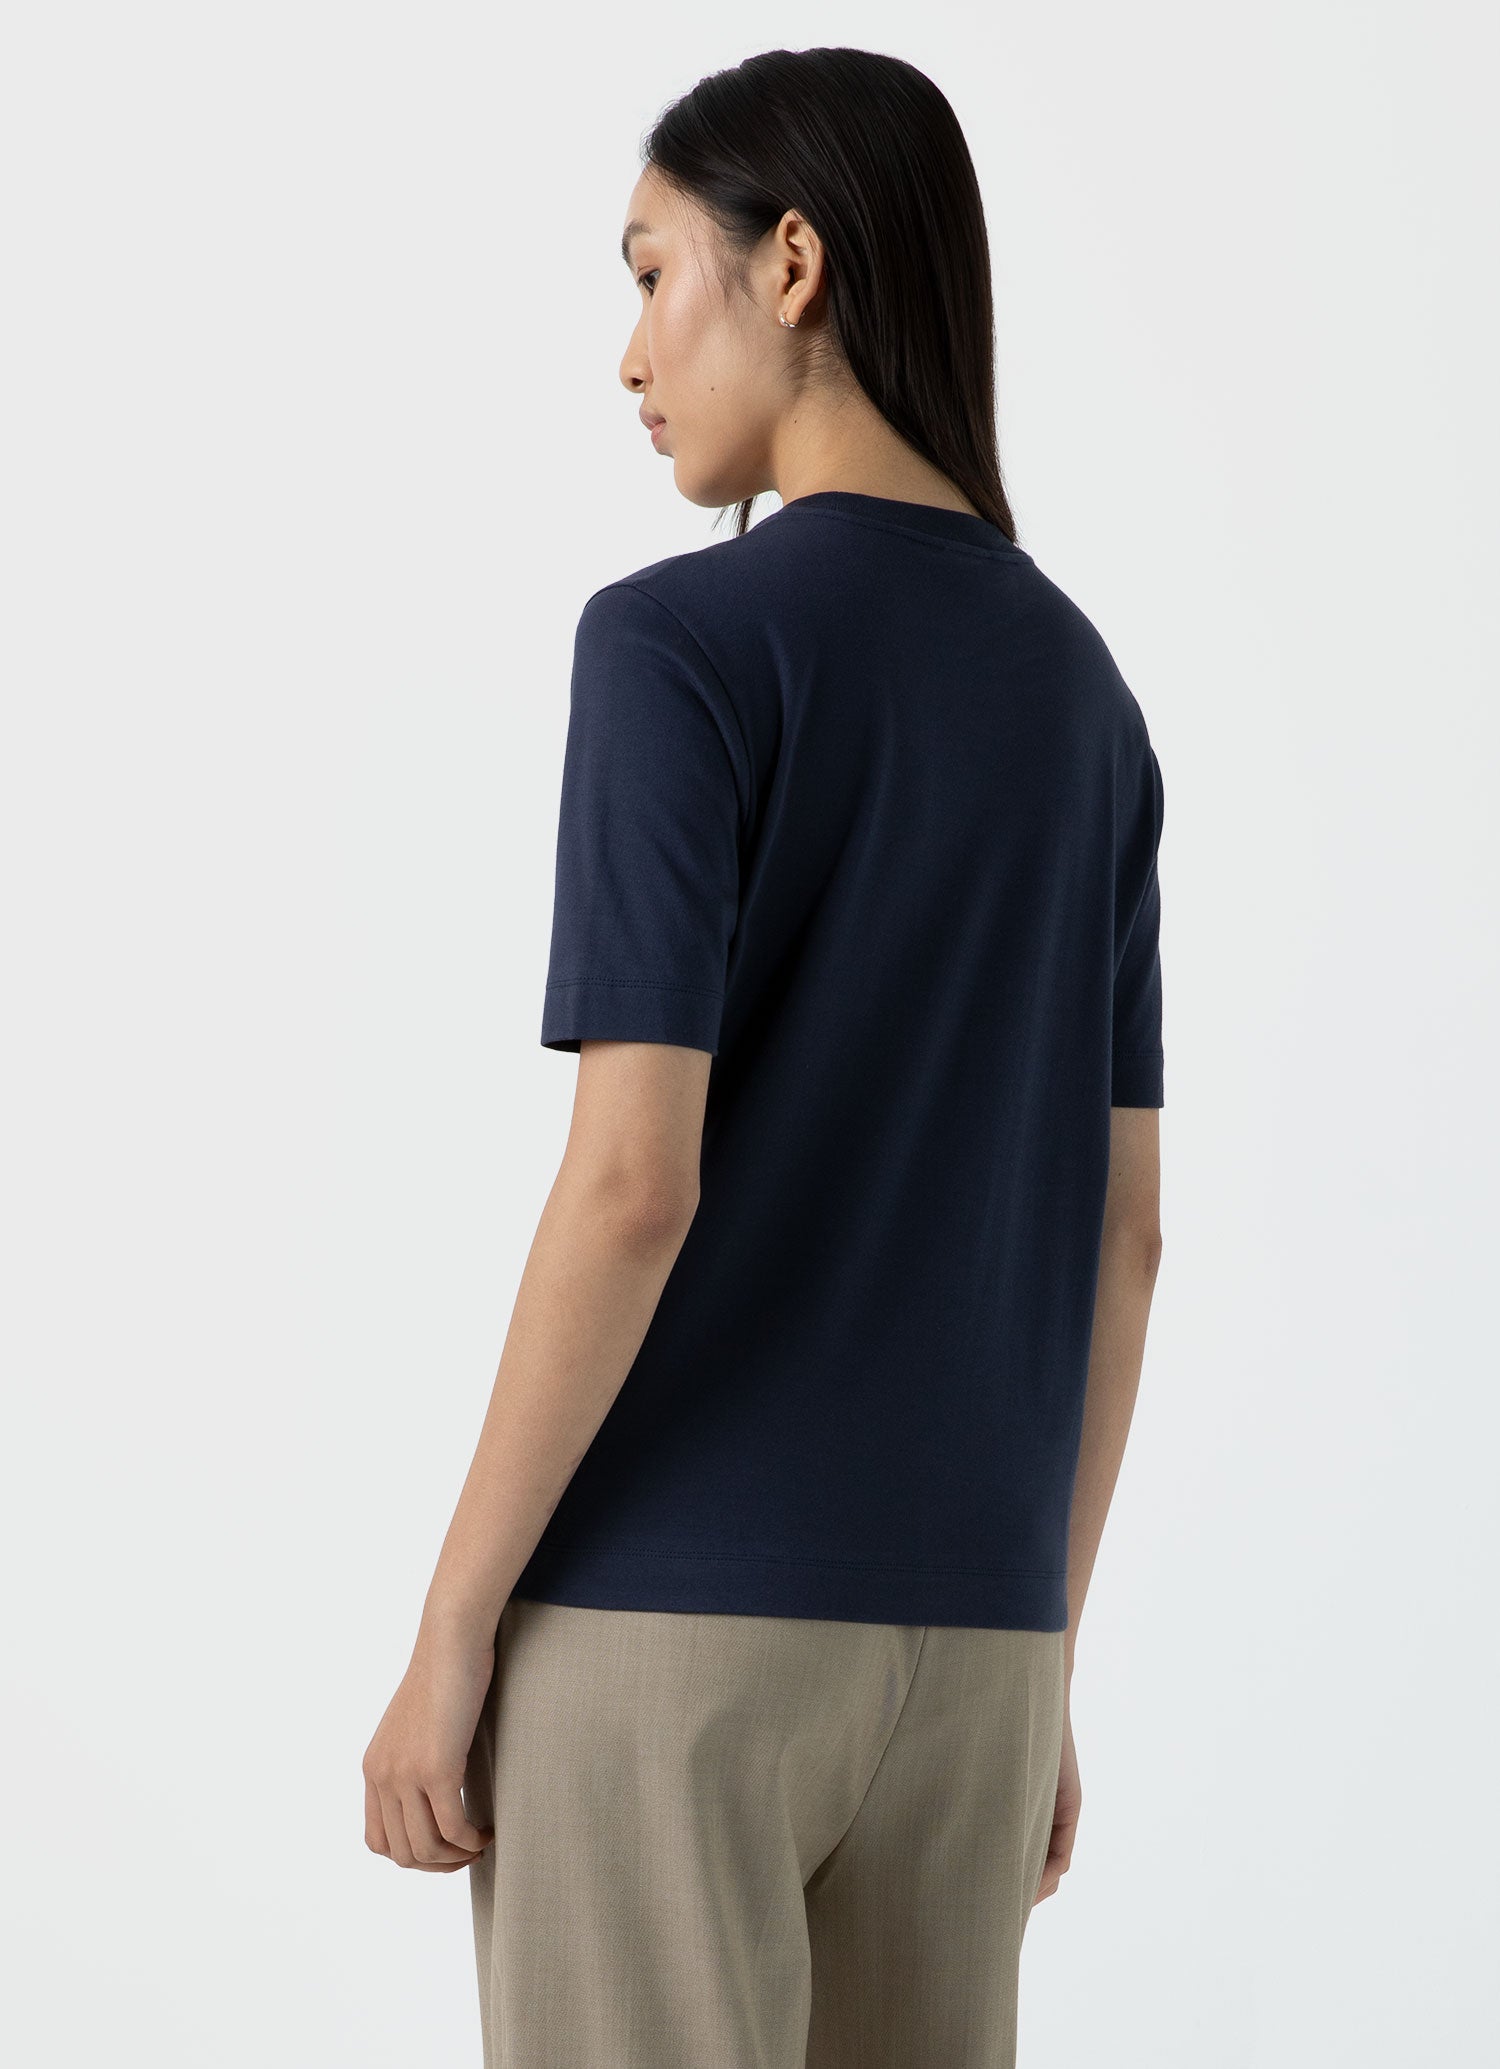 Women's Mid Sleeve T-shirt in Navy